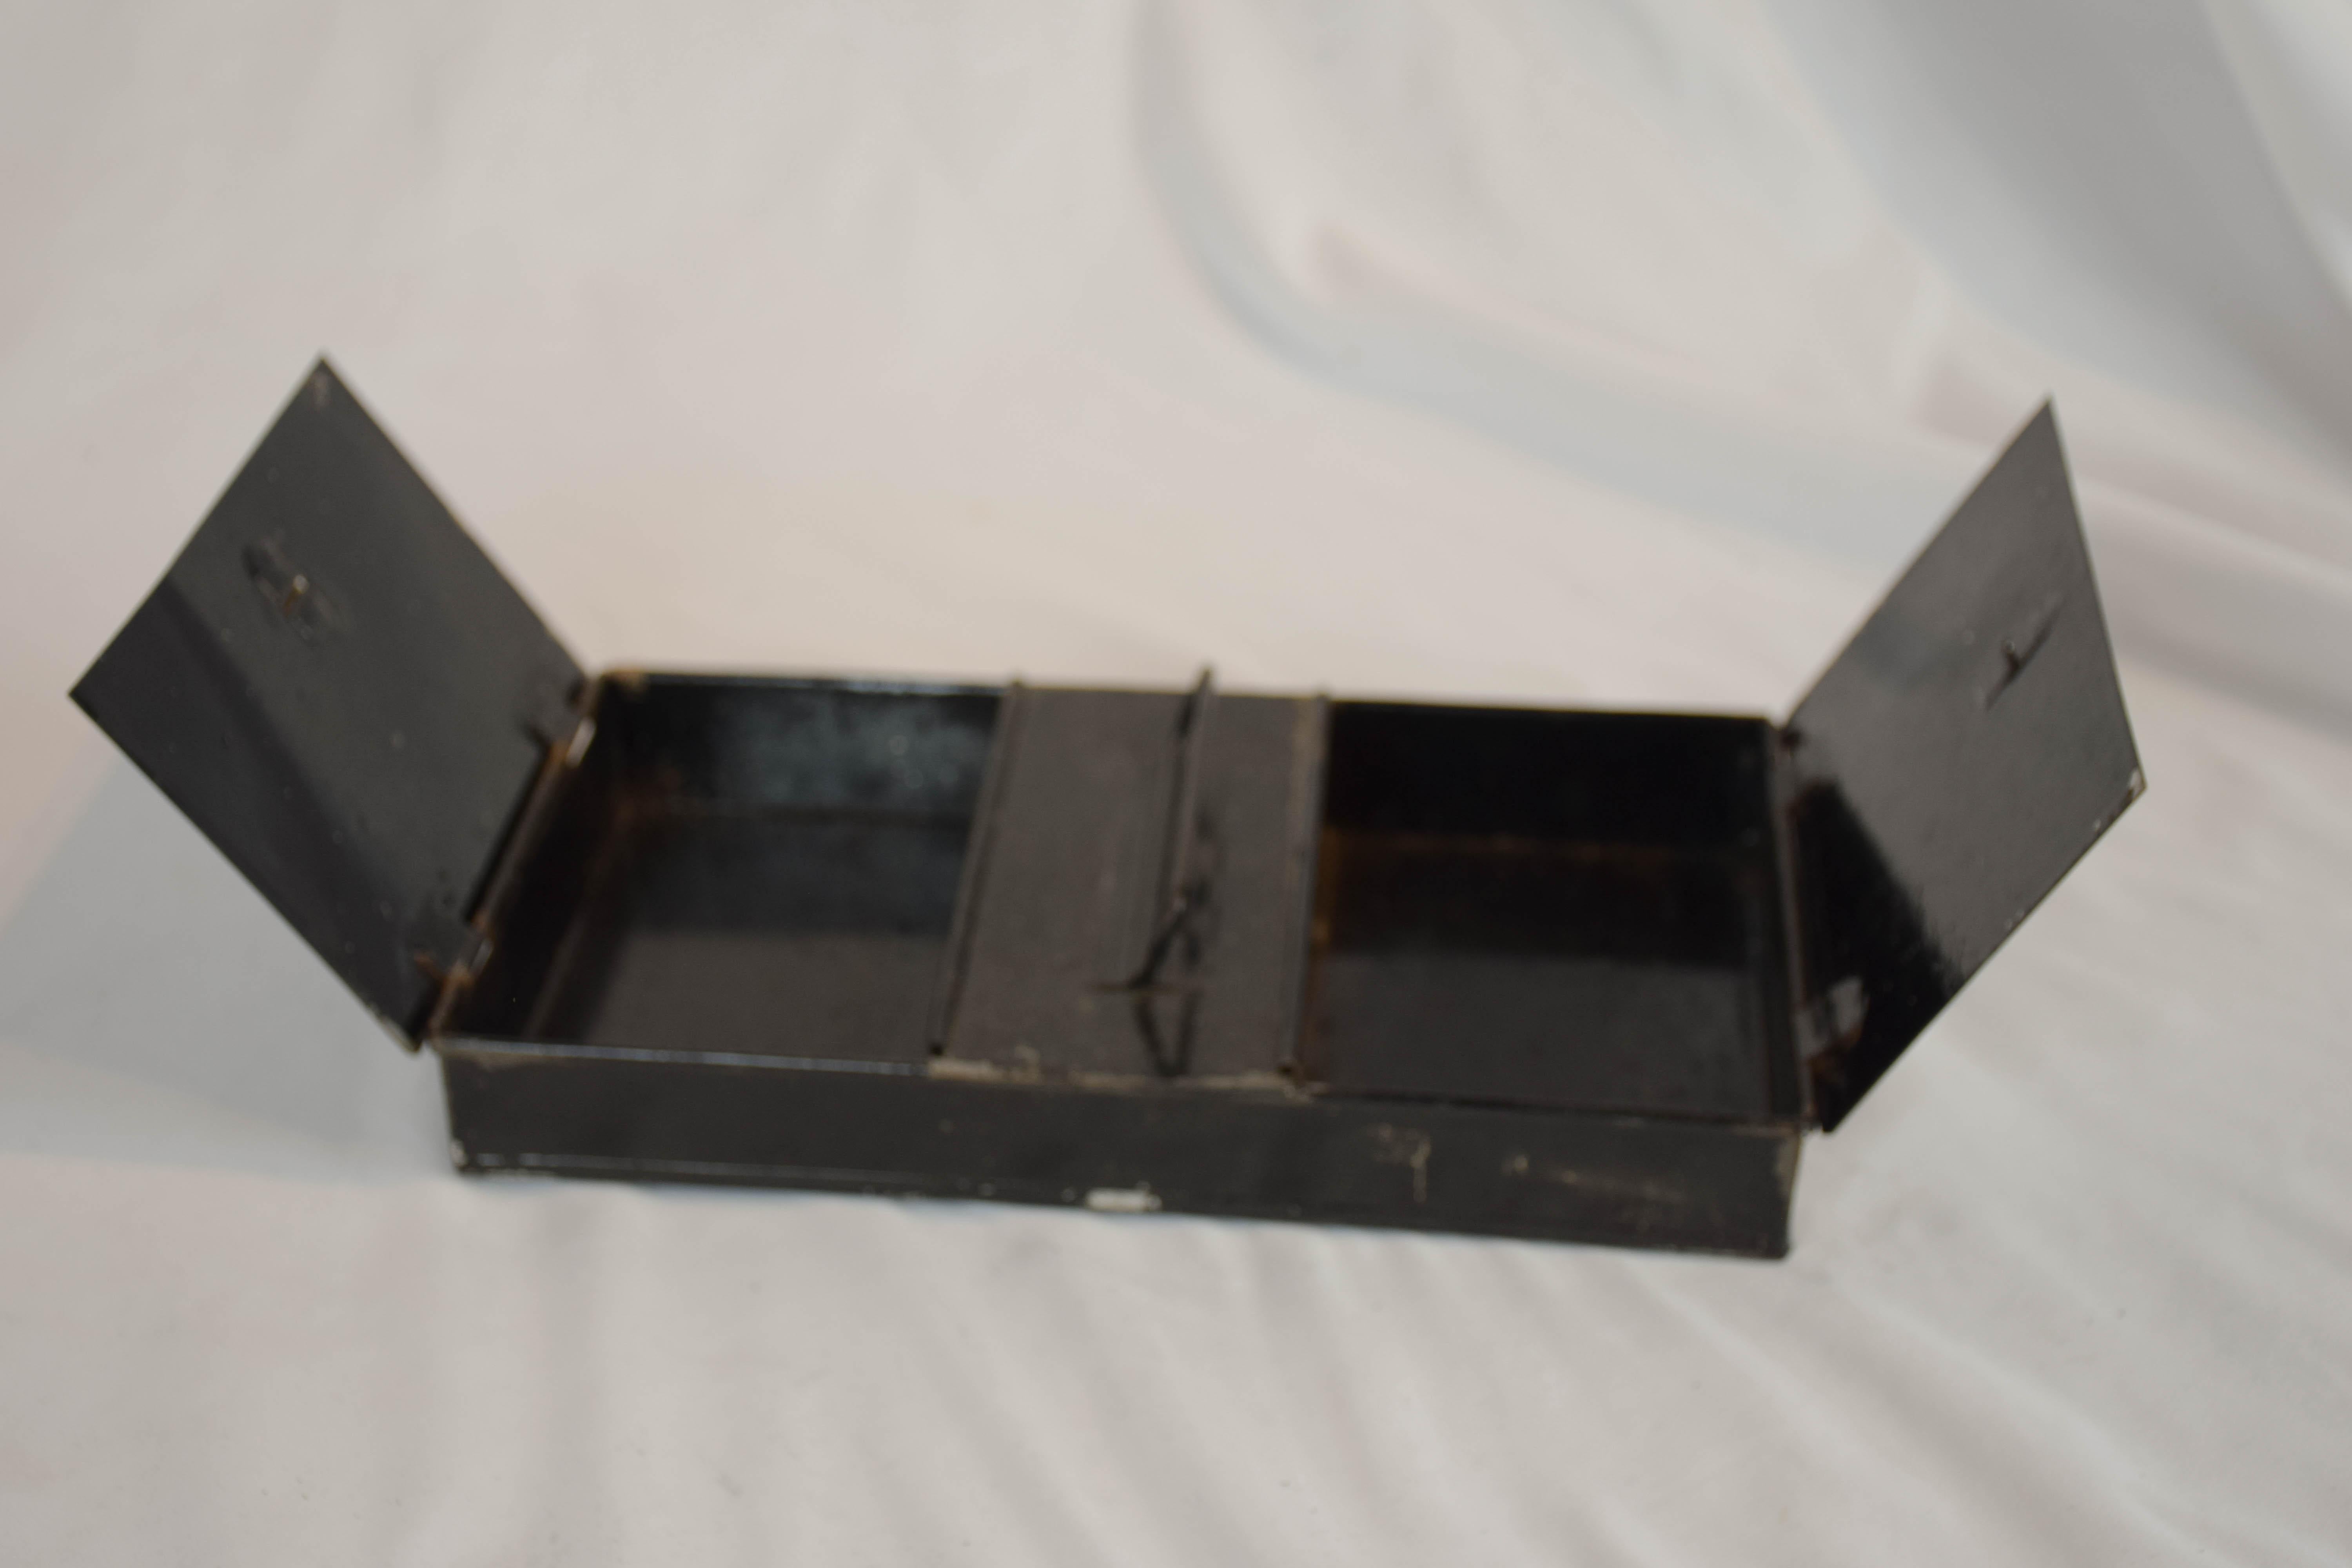 19th Century English Metal Cash Box 2